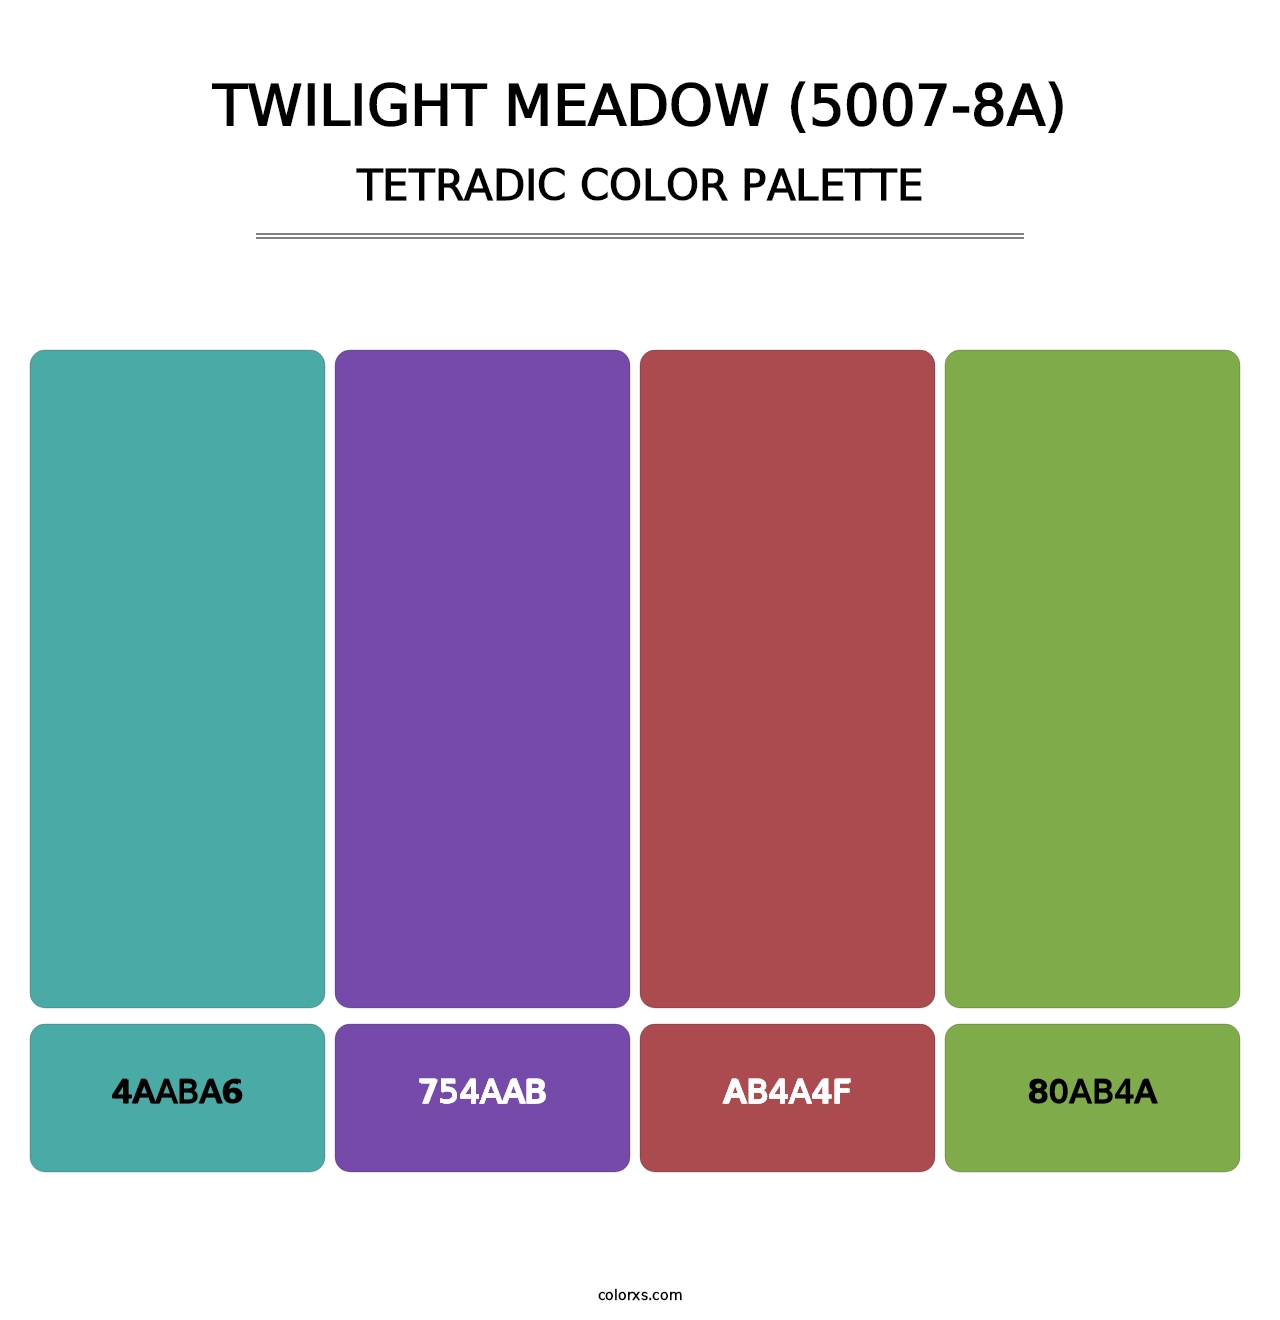 Twilight Meadow (5007-8A) - Tetradic Color Palette